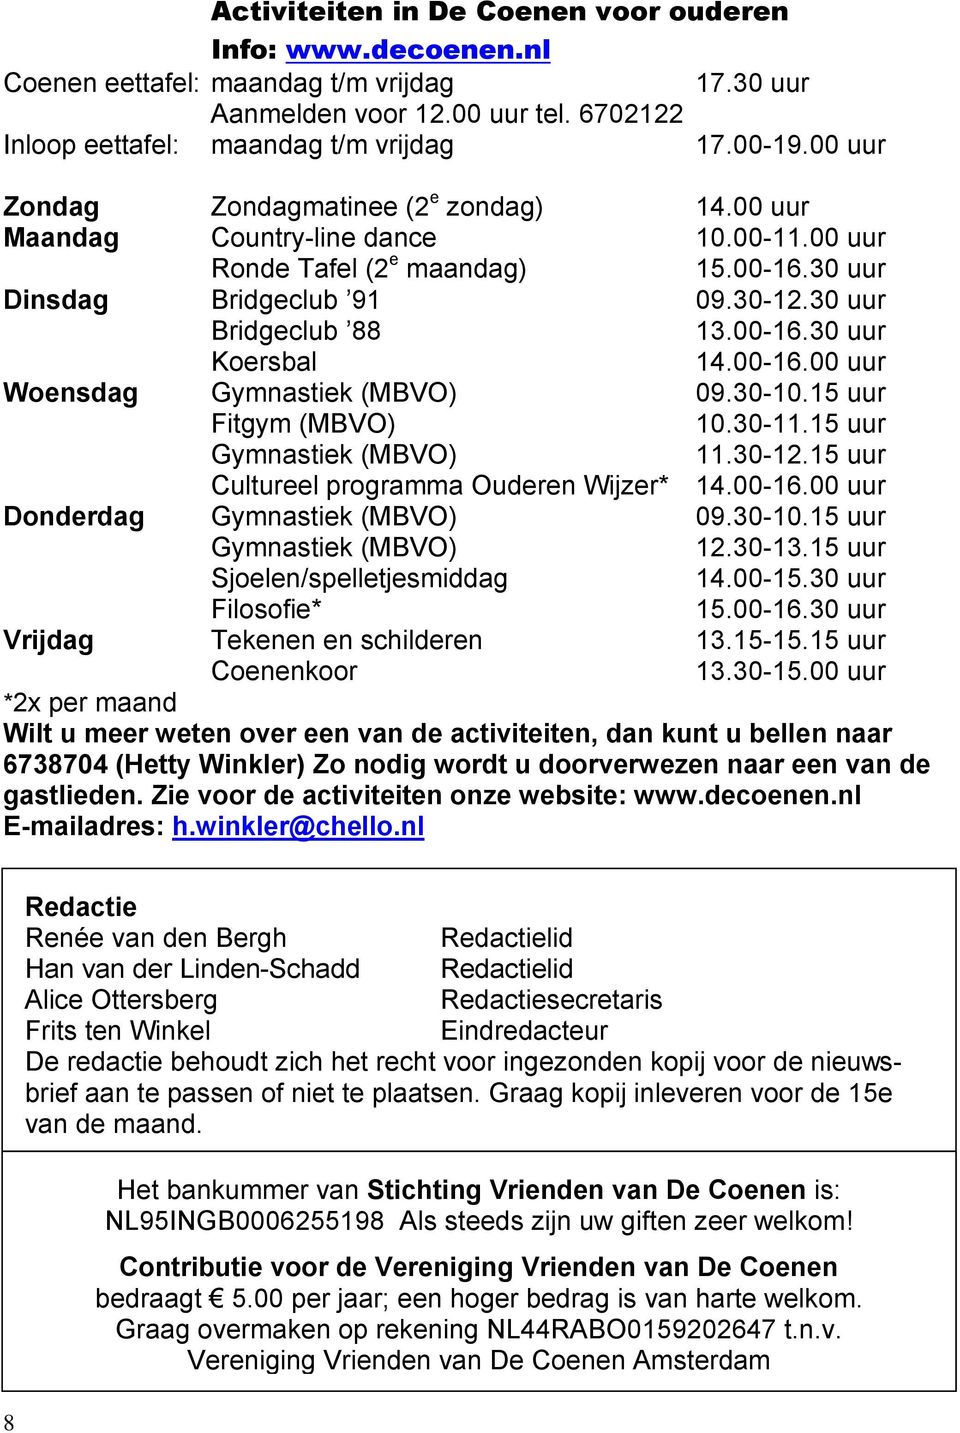 00-16.00 uur Woensdag Gymnastiek (MBVO) 09.30-10.15 uur Fitgym (MBVO) 10.30-11.15 uur Gymnastiek (MBVO) 11.30-12.15 uur Cultureel programma Ouderen Wijzer* 14.00-16.00 uur Donderdag Gymnastiek (MBVO) 09.